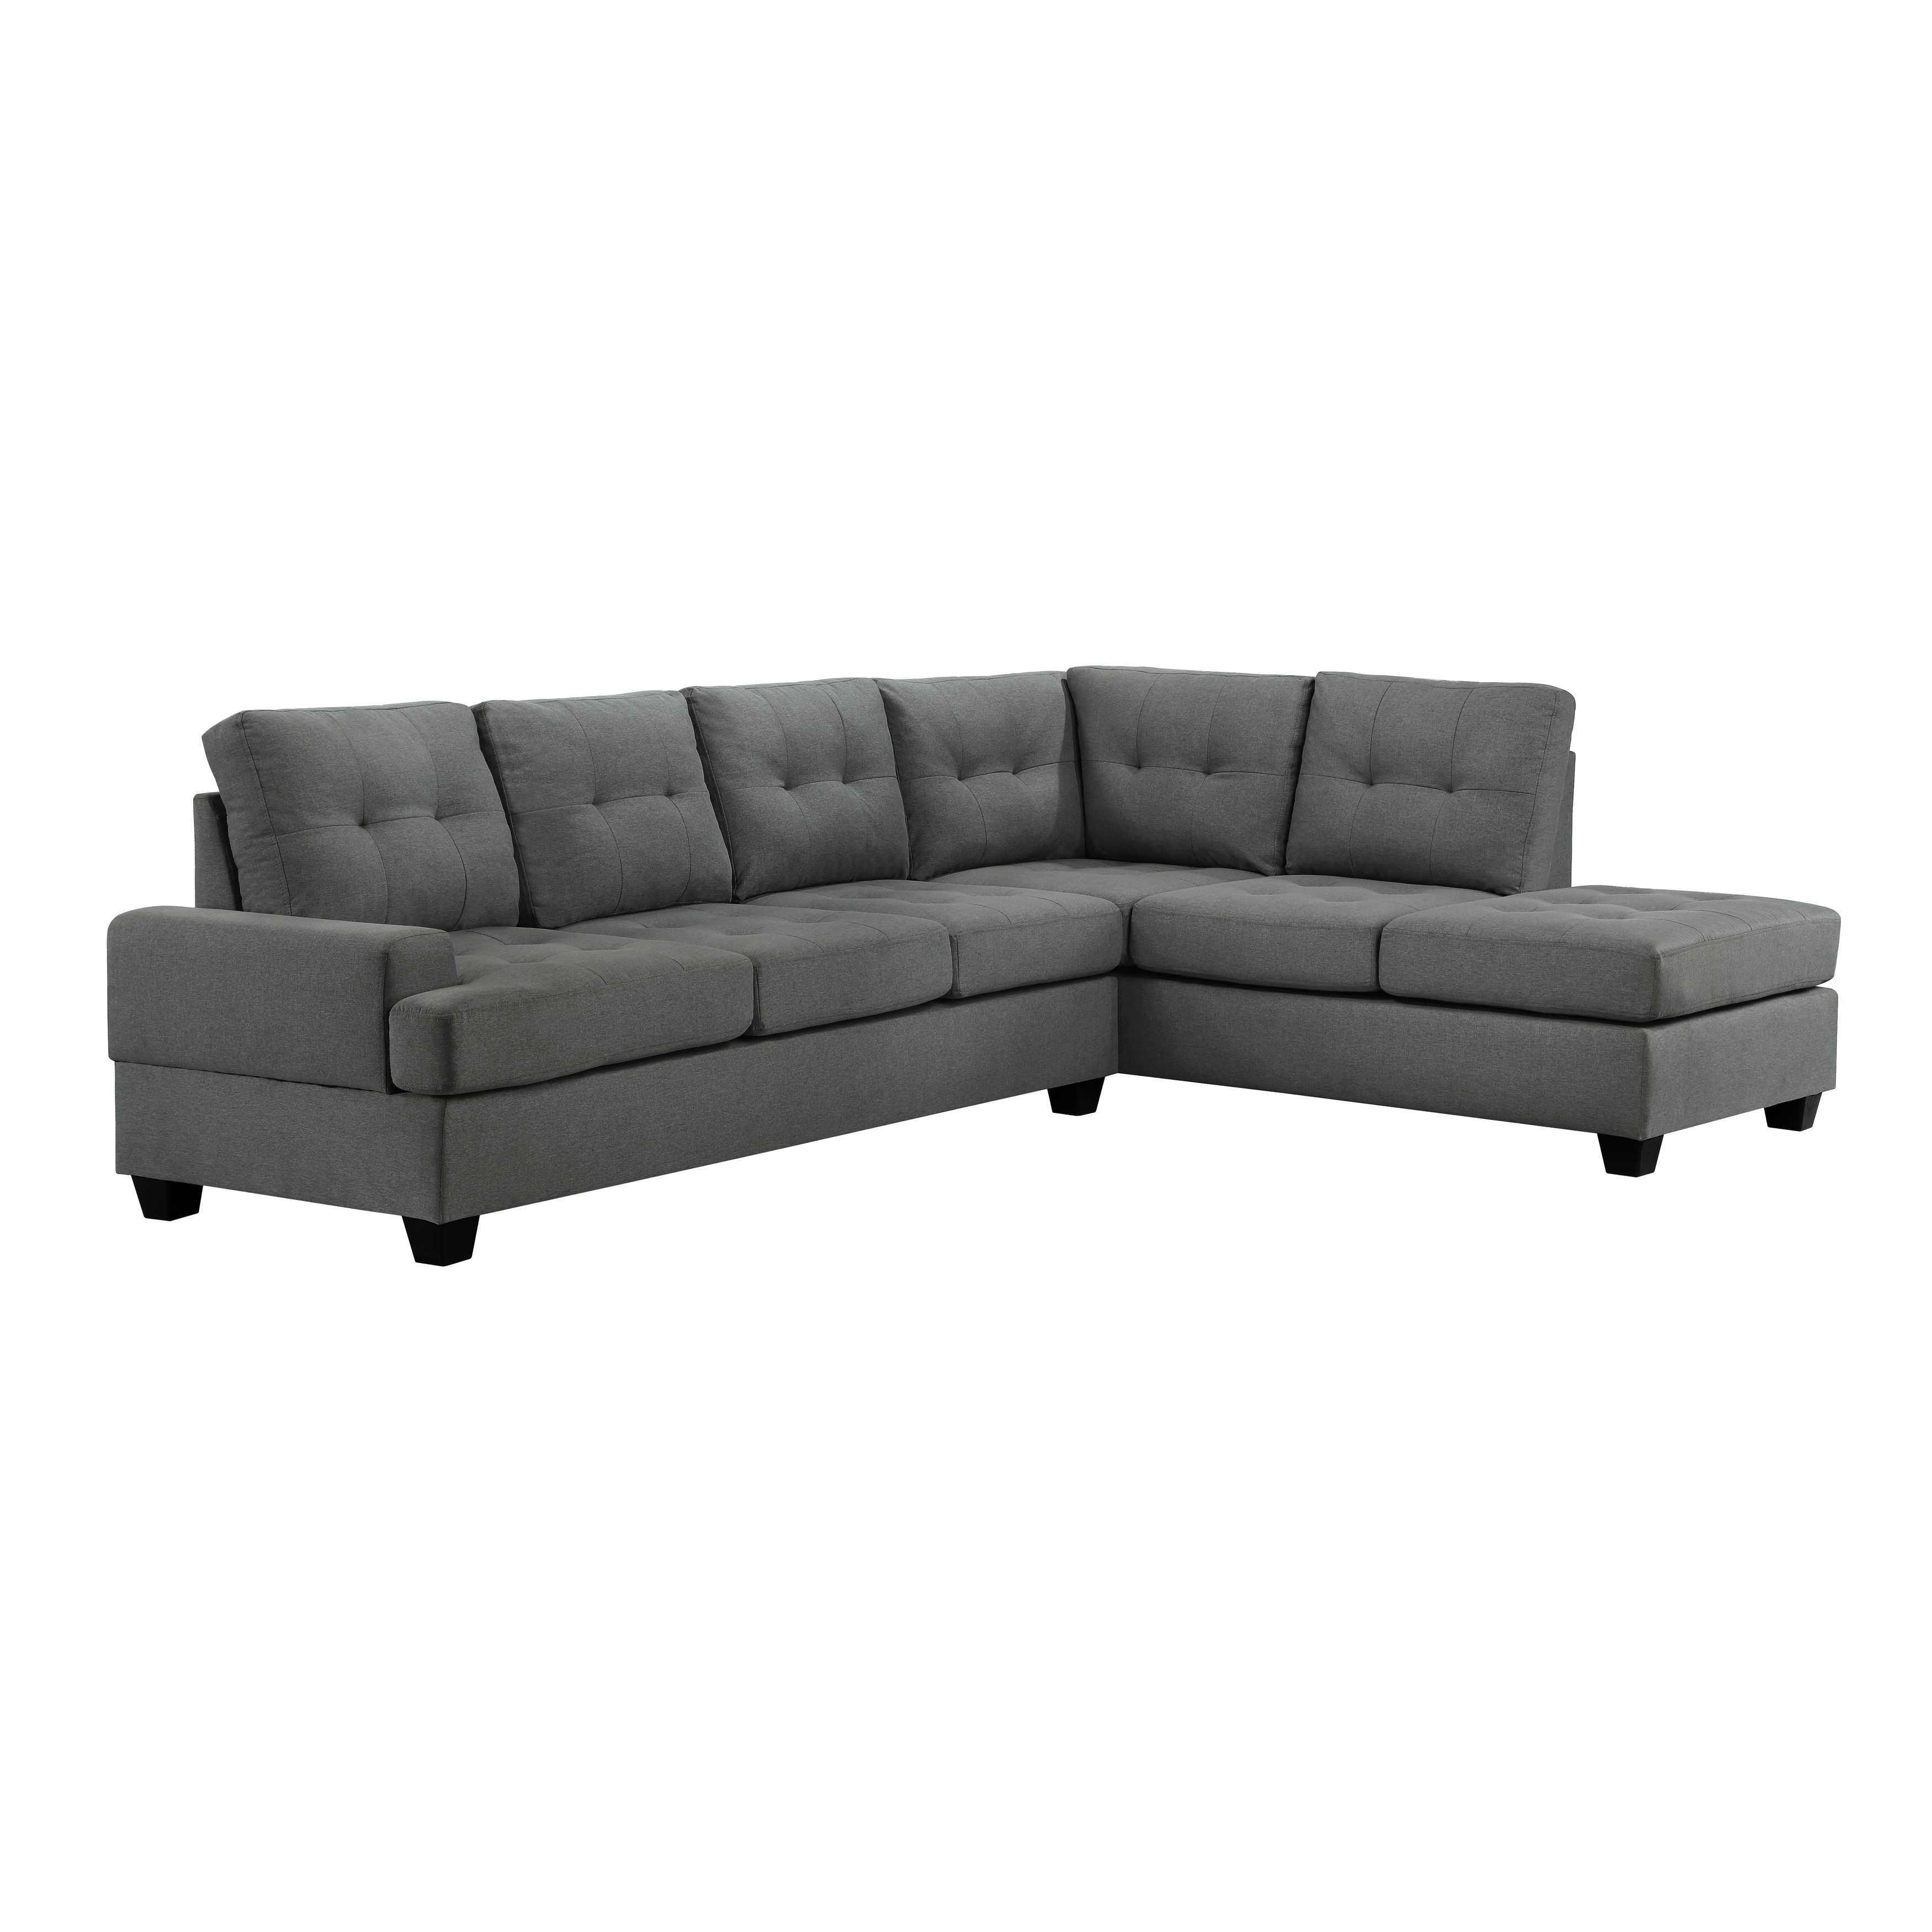 Dunstan Reversible Dark Grey Sectional Sofa Collection 9367DG